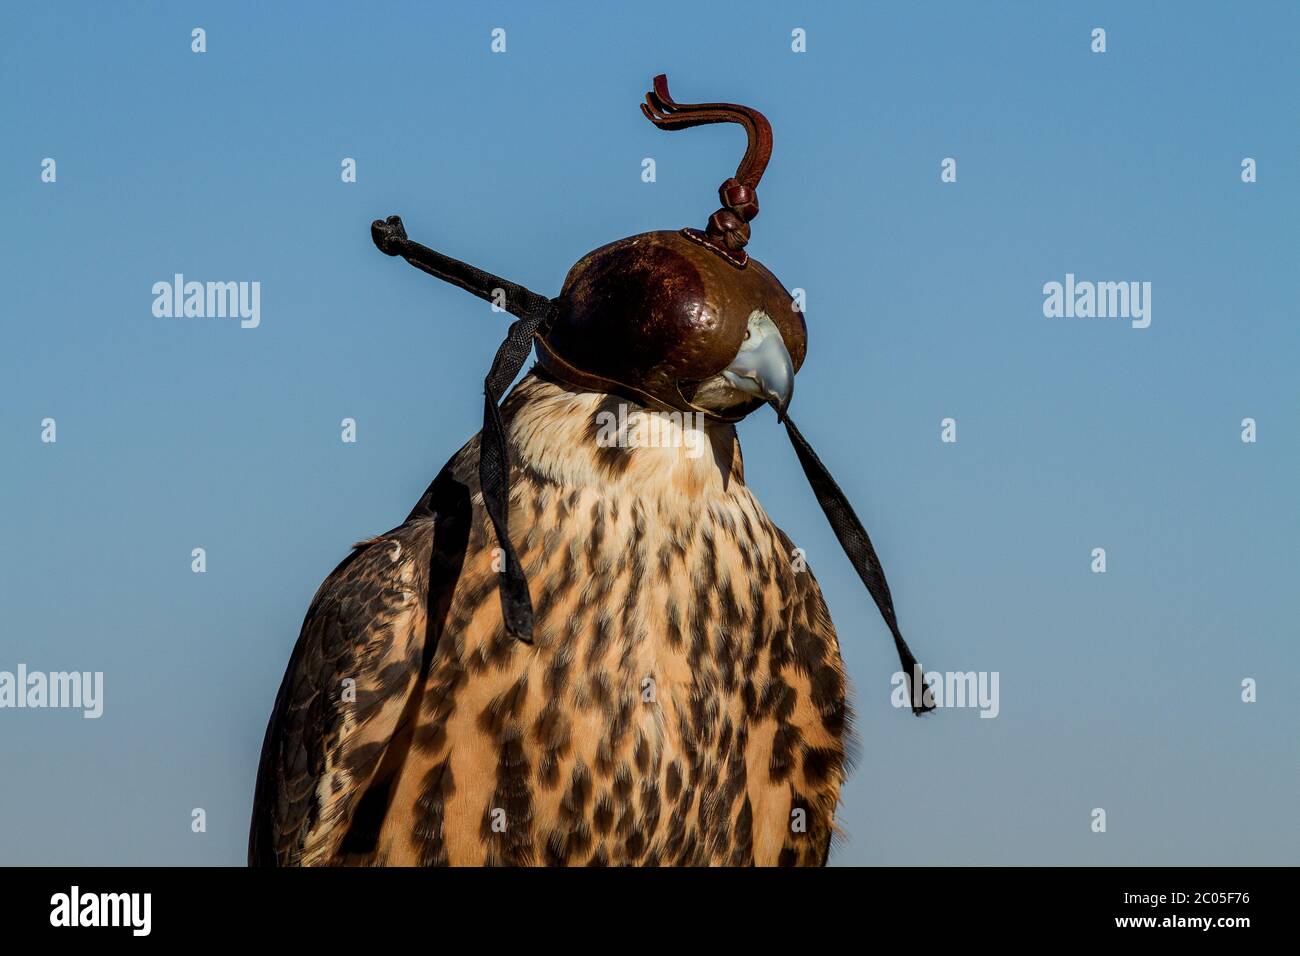 bird of prey portrait Stock Photo